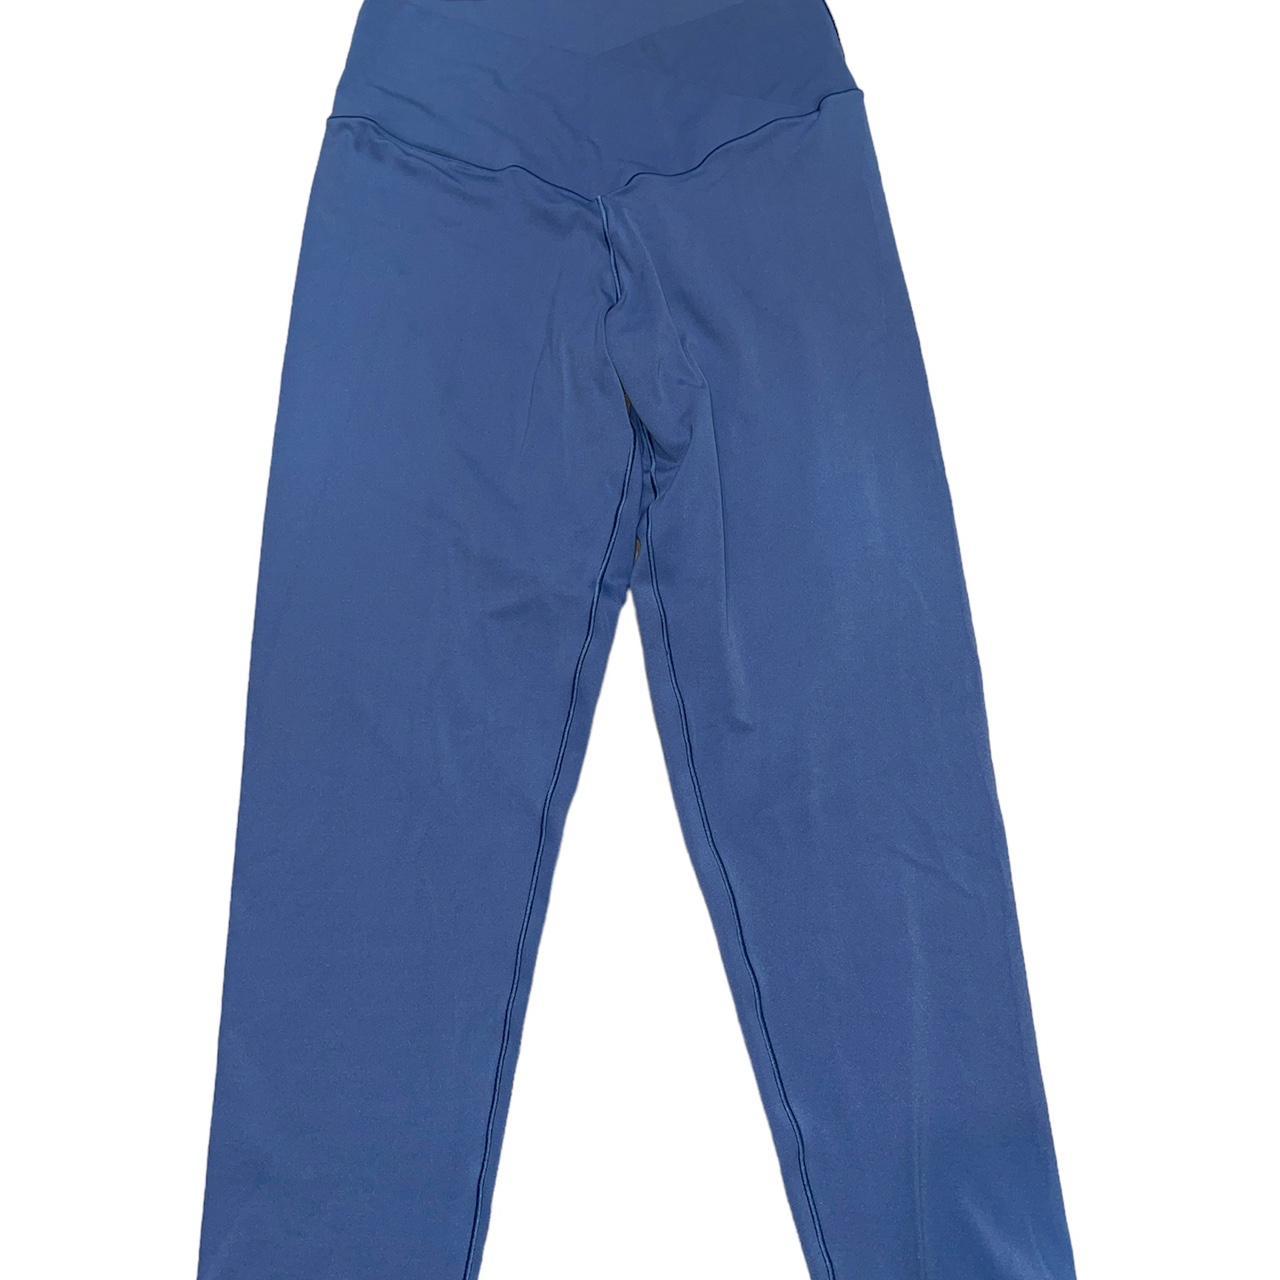 Aerie Offline leggings, royal blue size M - Depop